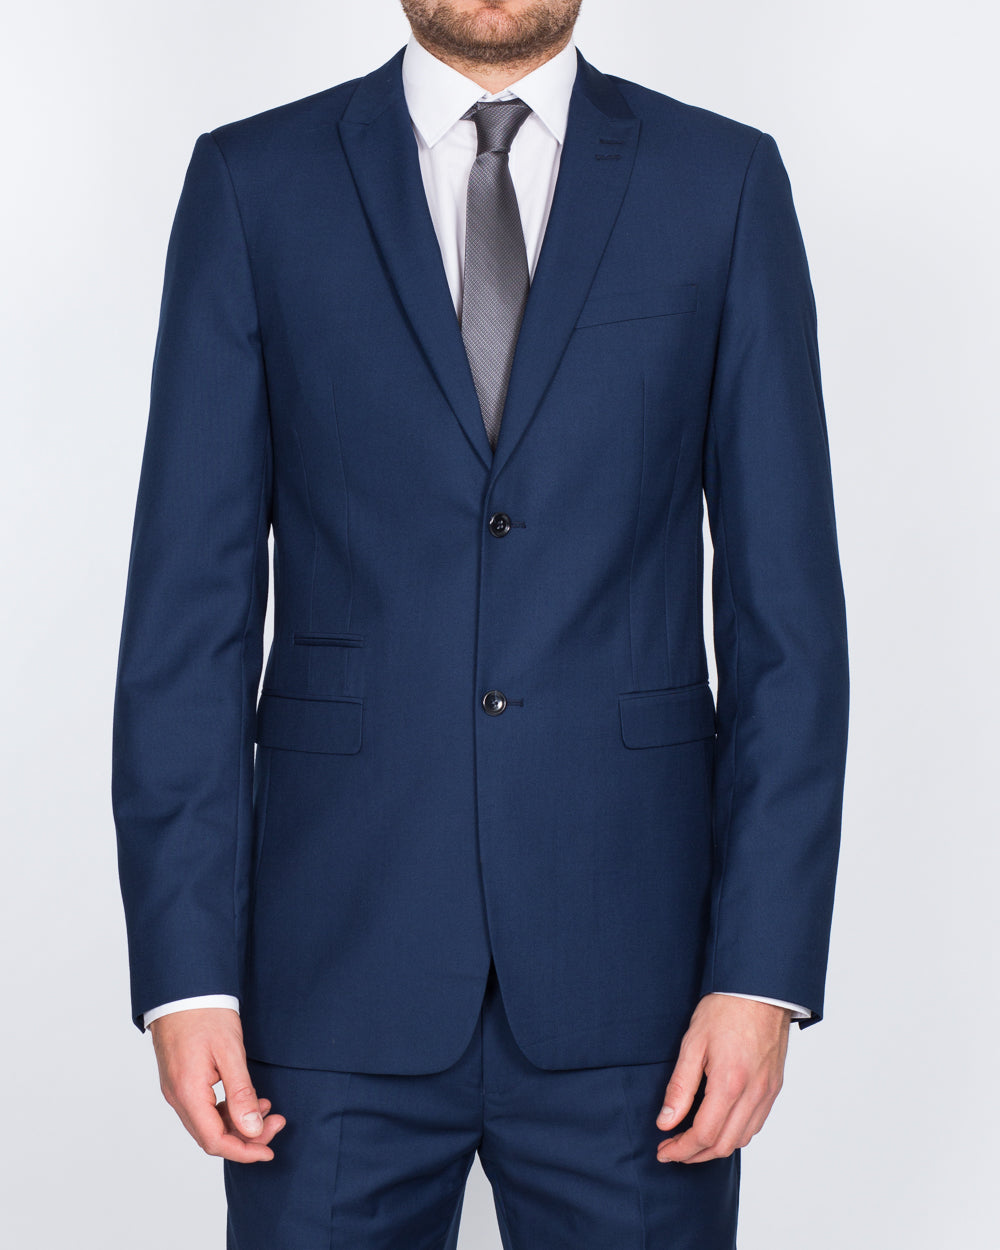 Skopes Slim Fit Tall Suit Jacket (royale blue)